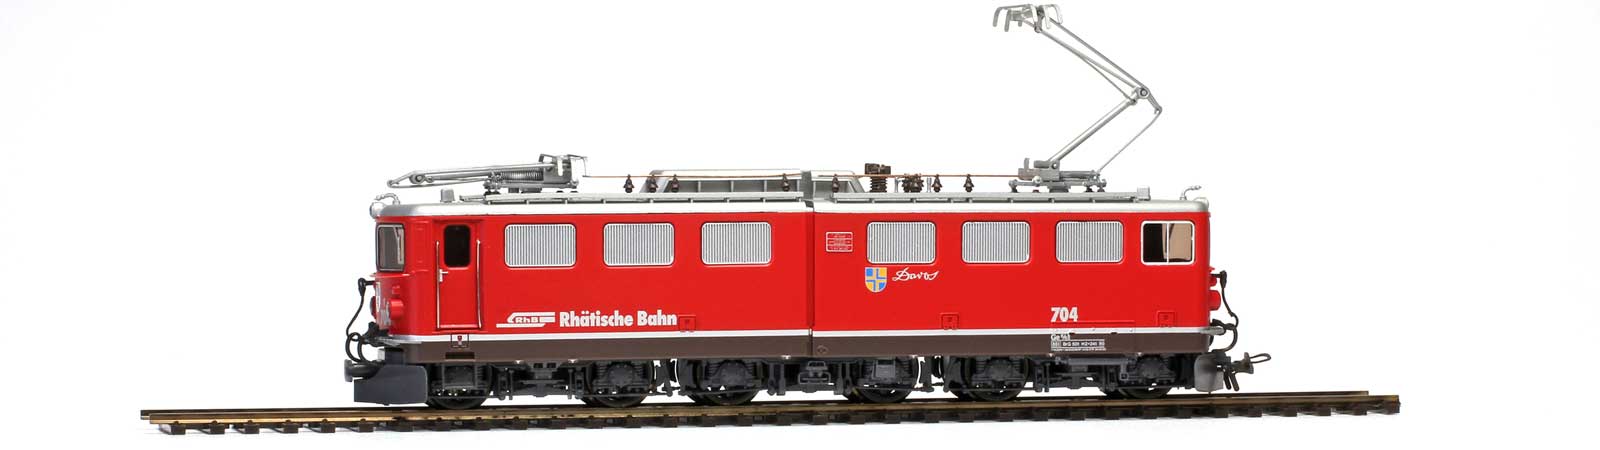 Bemo 1254 134 RhB Ge 6/6 II 704 'Davos' universal locomotive